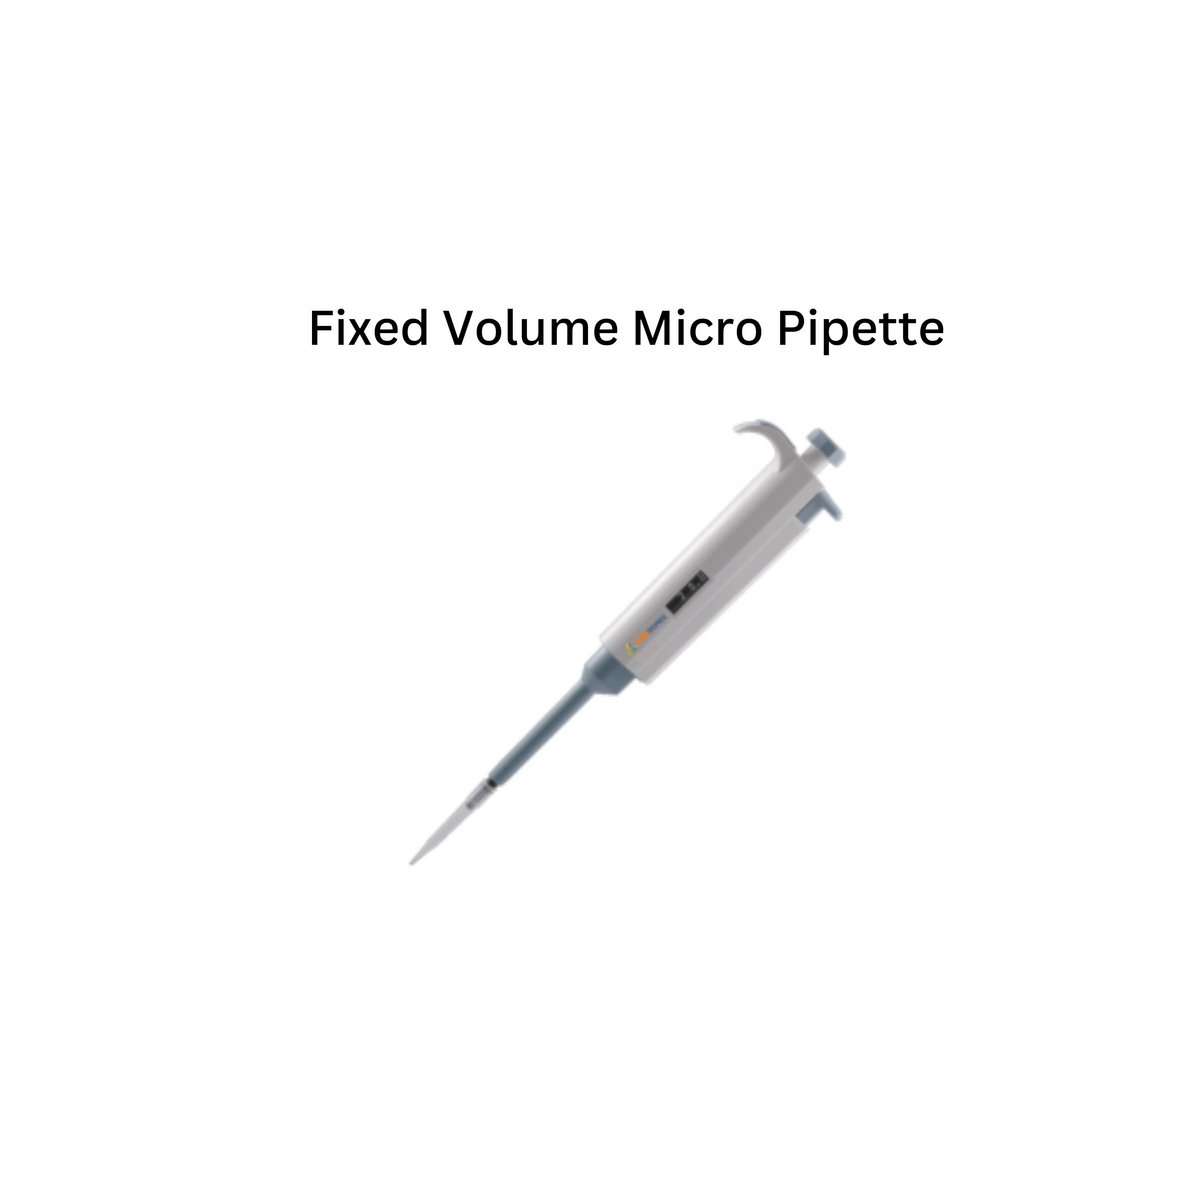 Fixed Volume Micro Pipette.jpg